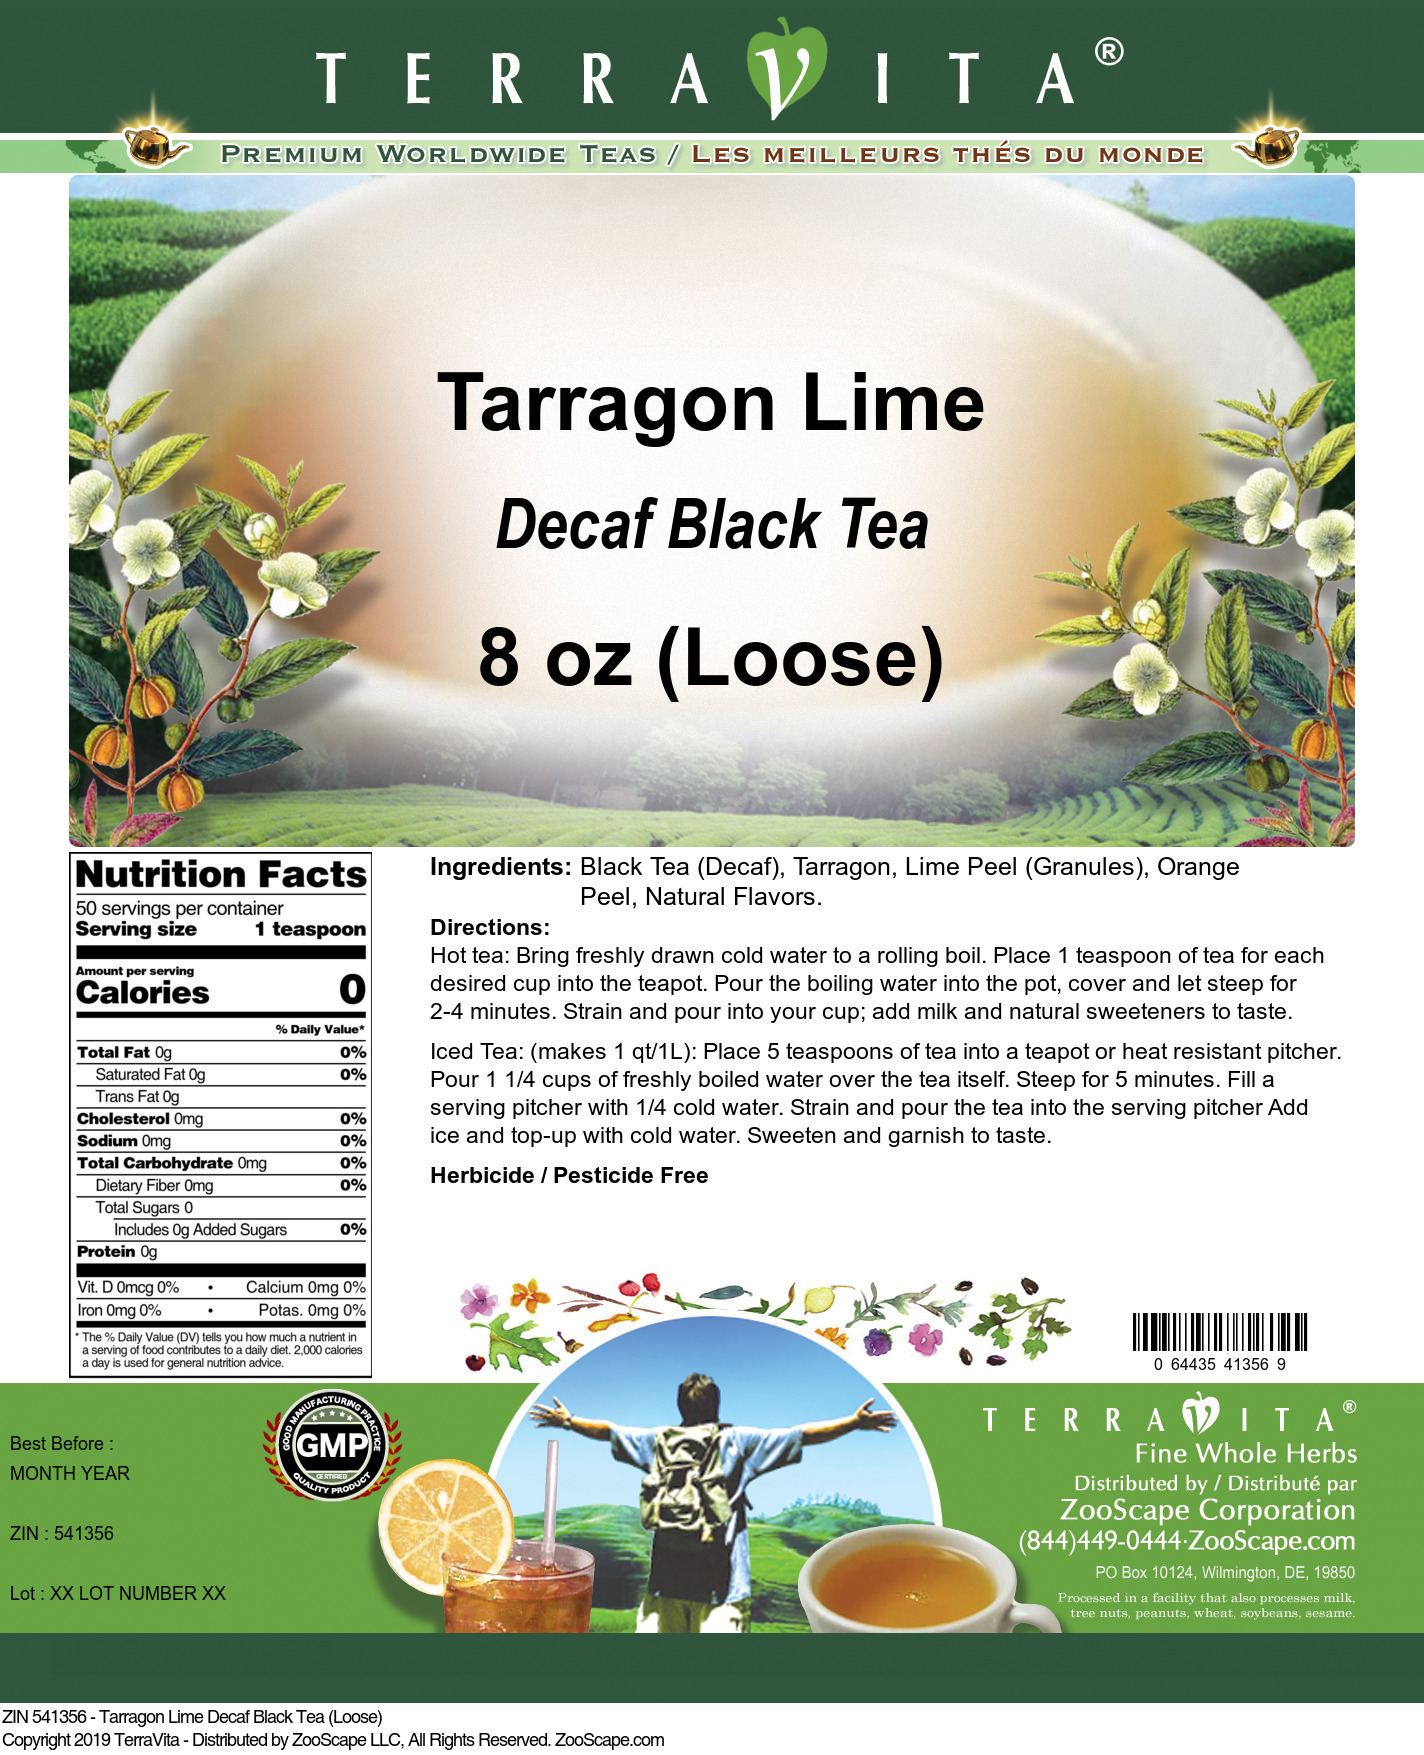 Tarragon Lime Decaf Black Tea (Loose) - Label